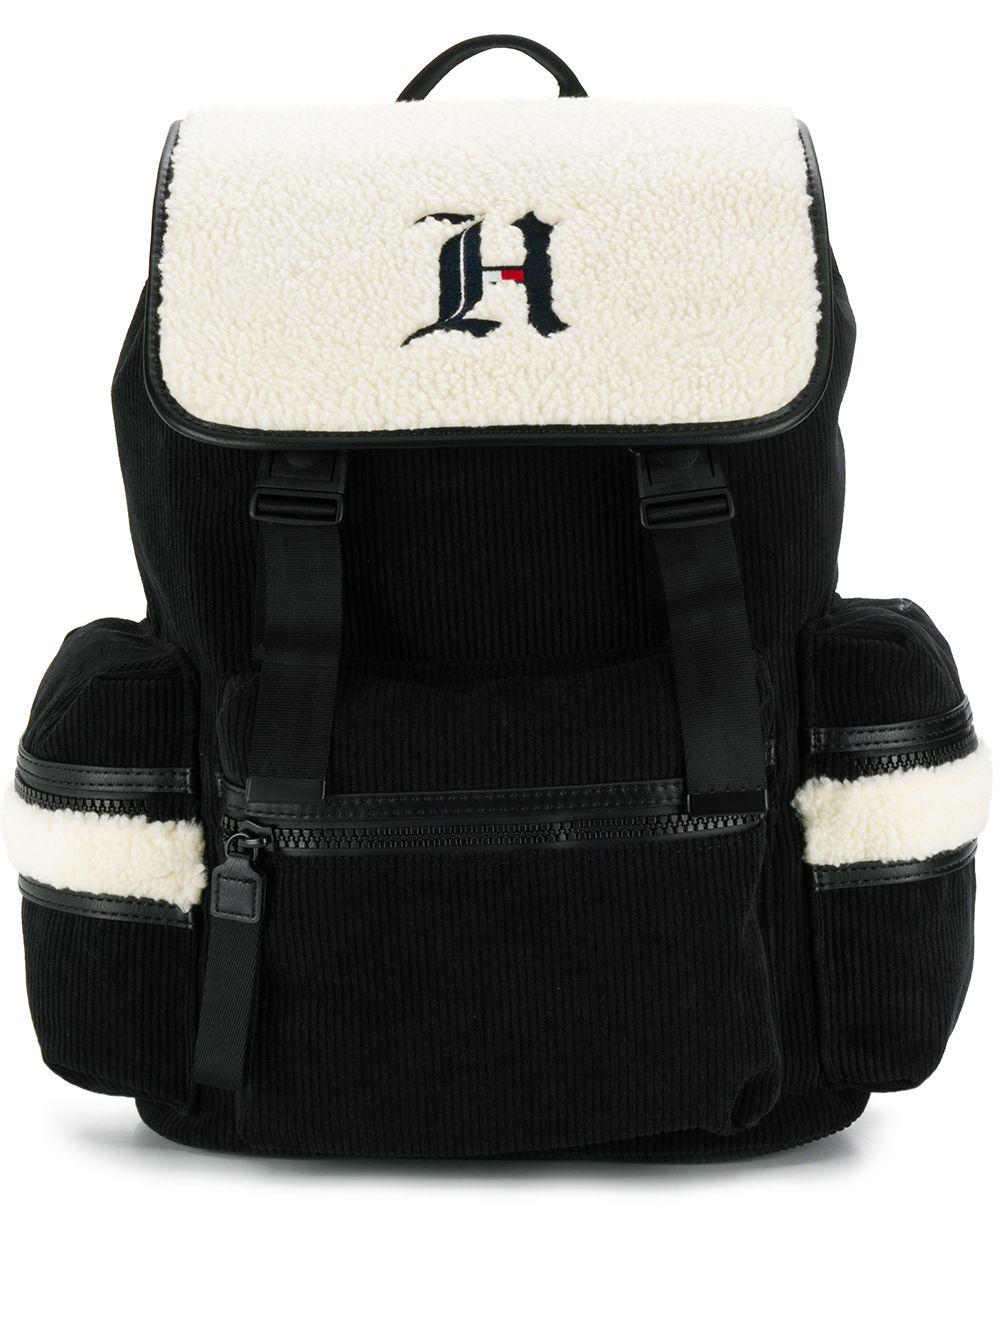 Tommy Hilfiger X Lewis Hamilton Backpack on Sale, SAVE 57%.